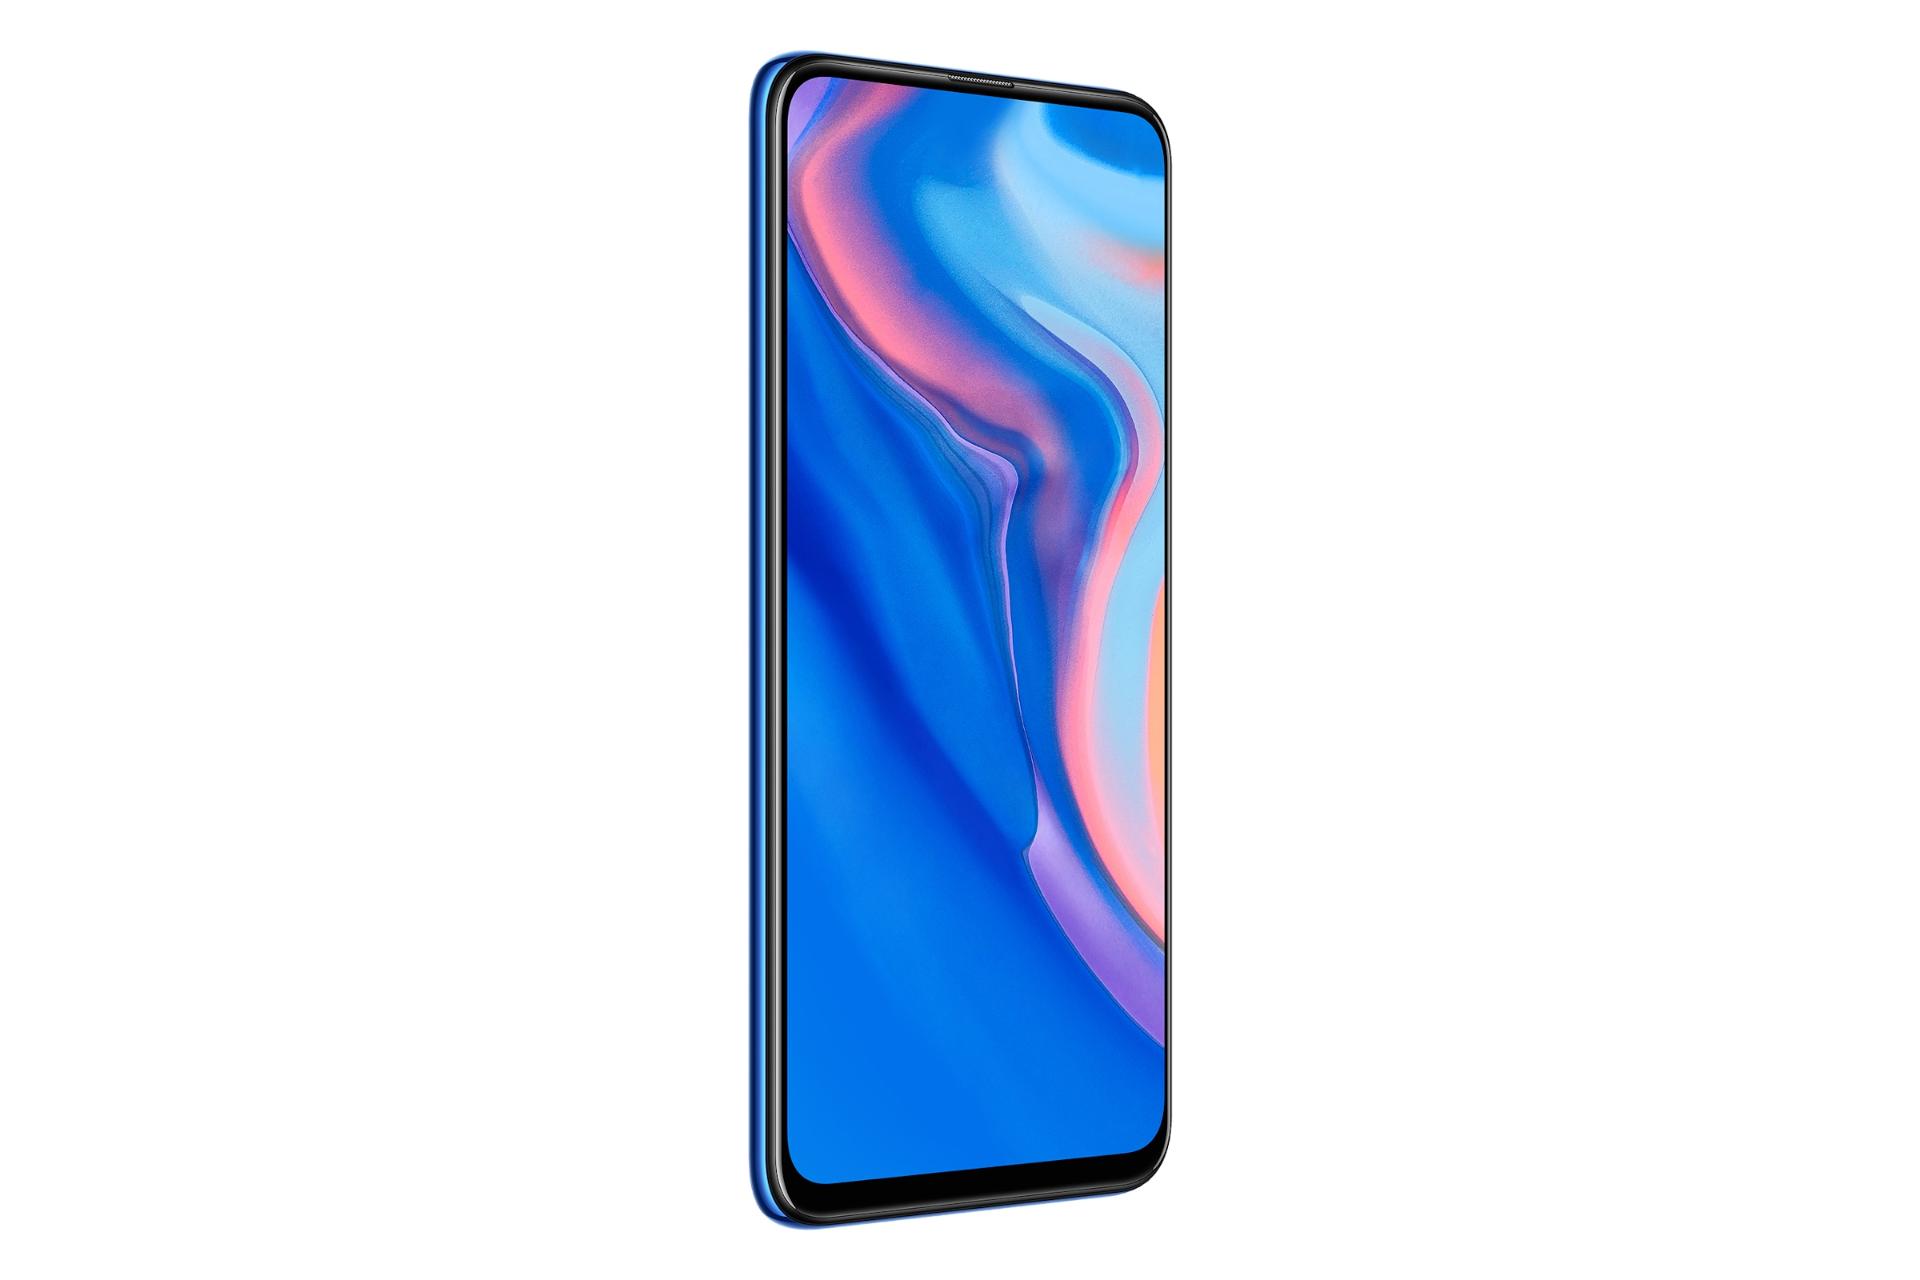 نمای چپ گوشی موبایل Y9 پرایم 2019 هواوی Huawei Y9 Prime 2019 آبی